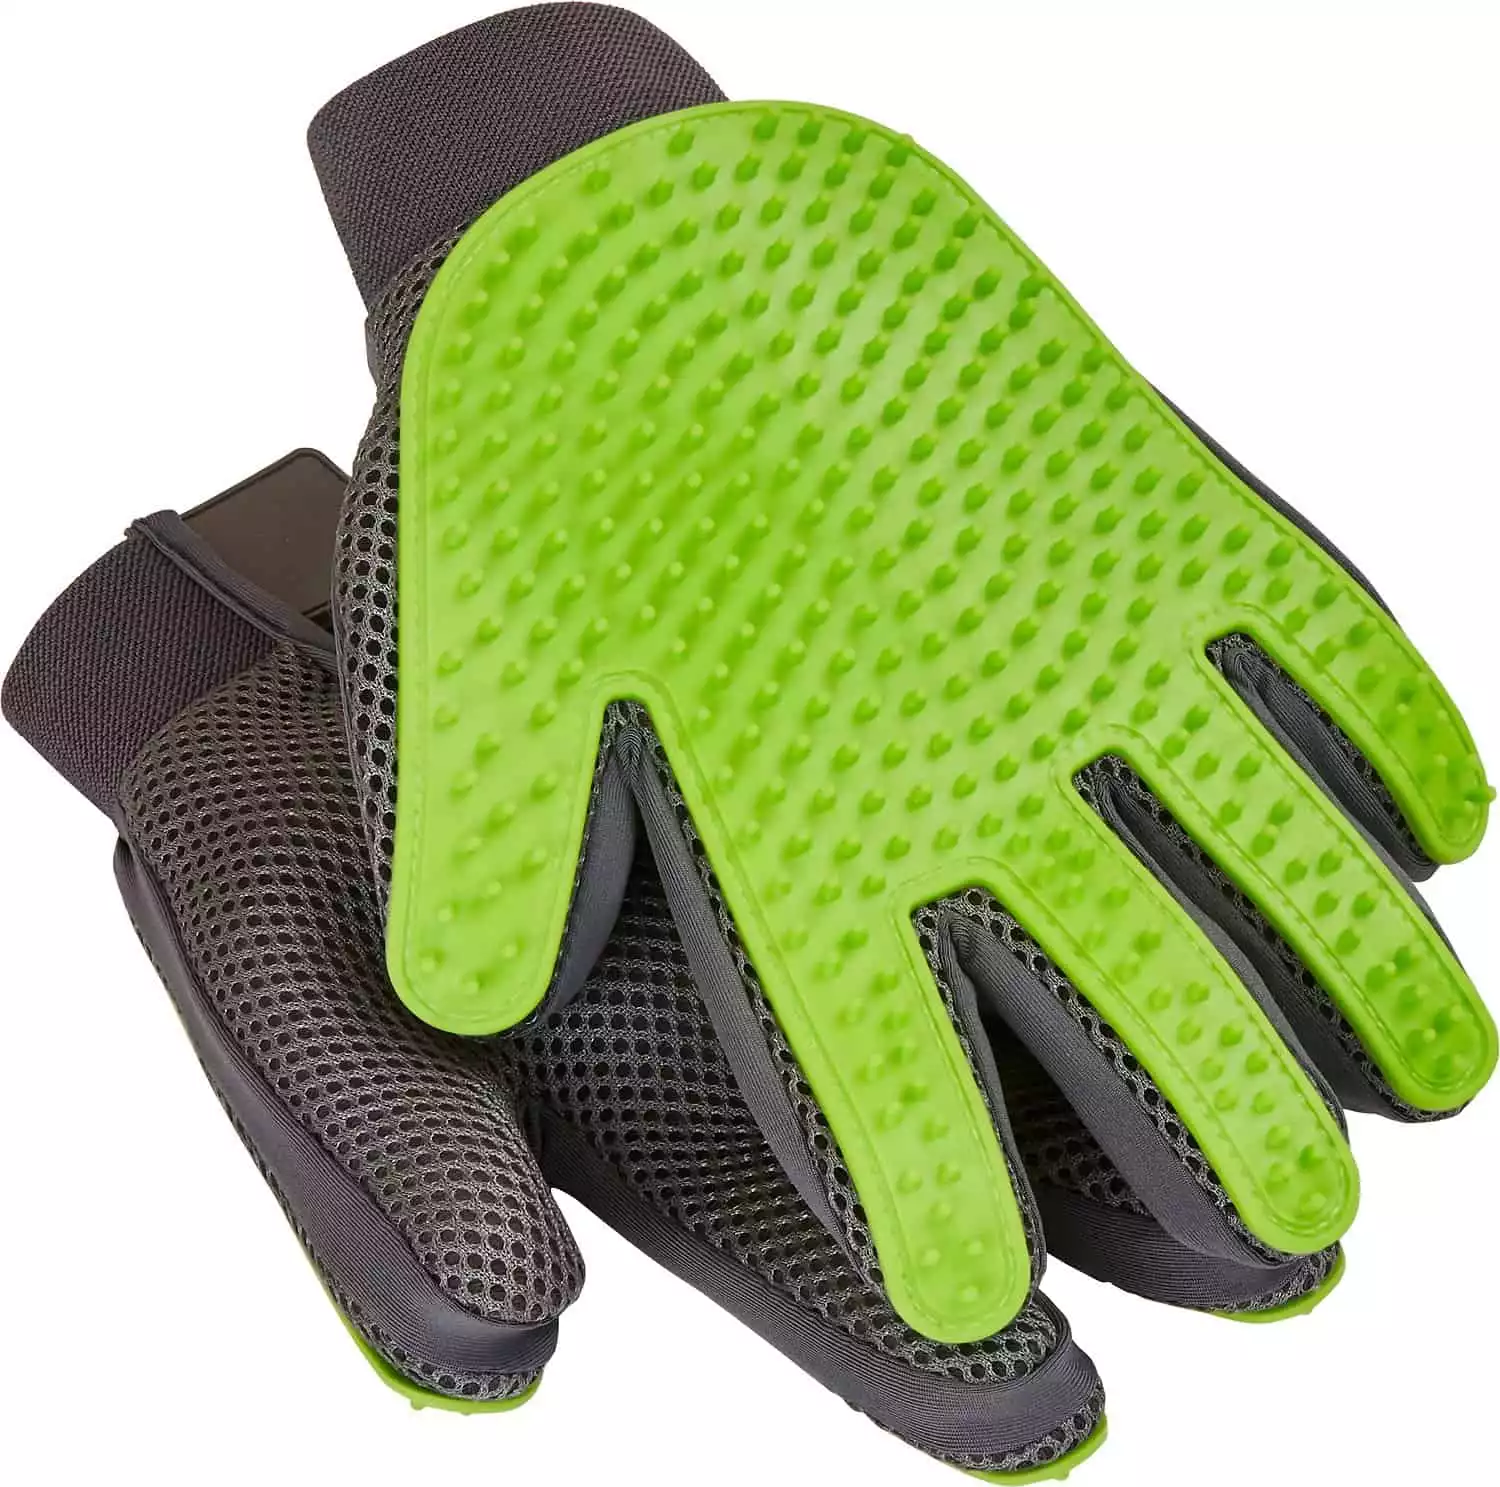 Frisco Grooming Glove